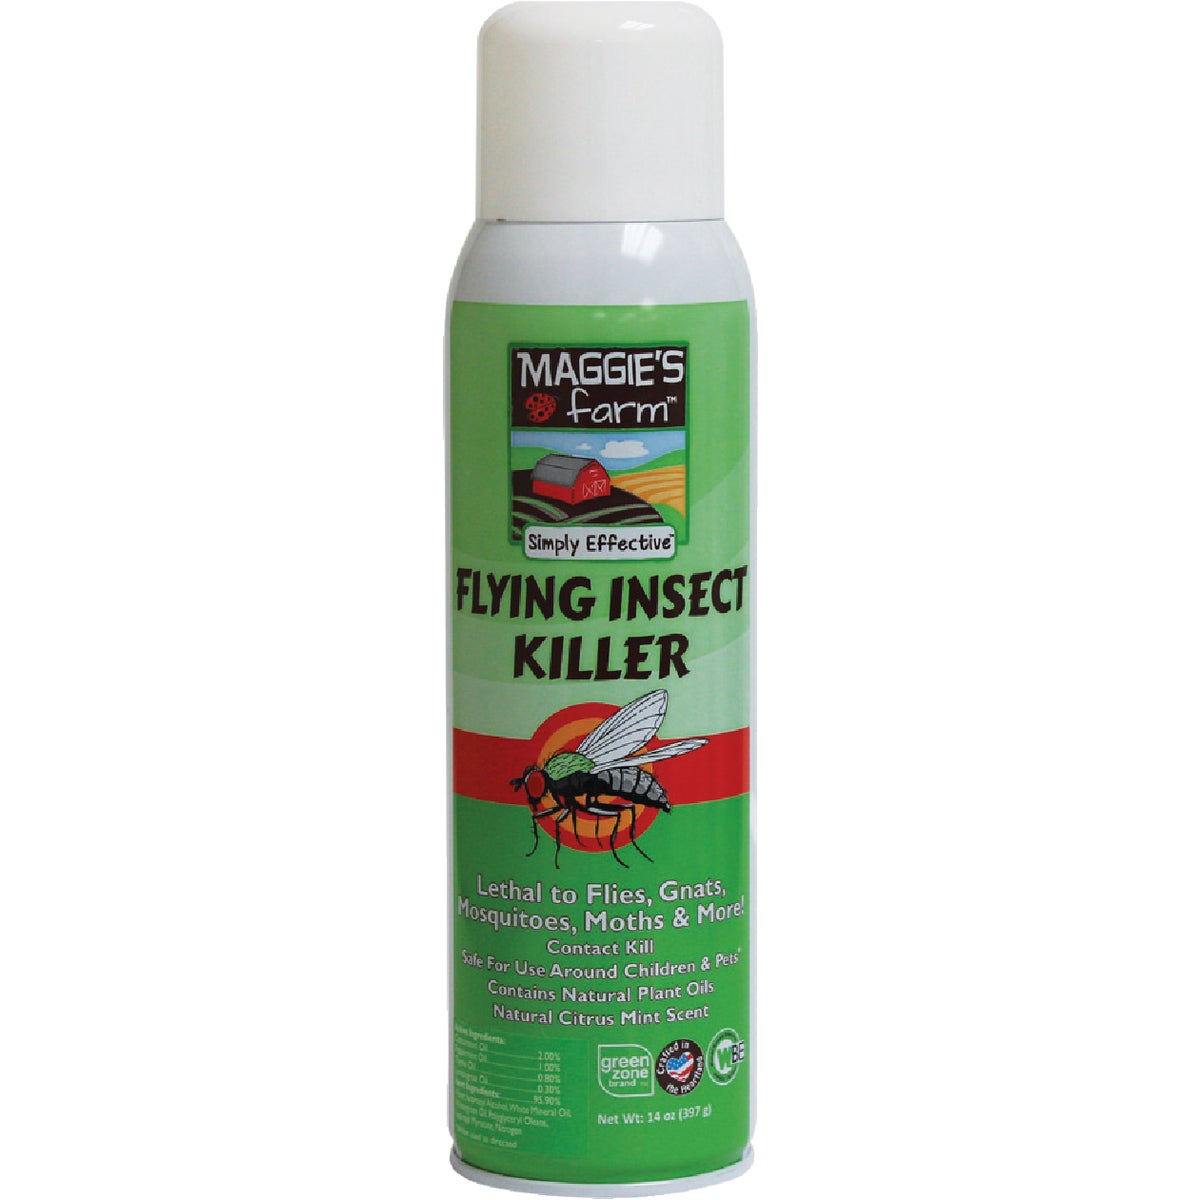 Item 704844, Fast acting aerosol flying insect killer.